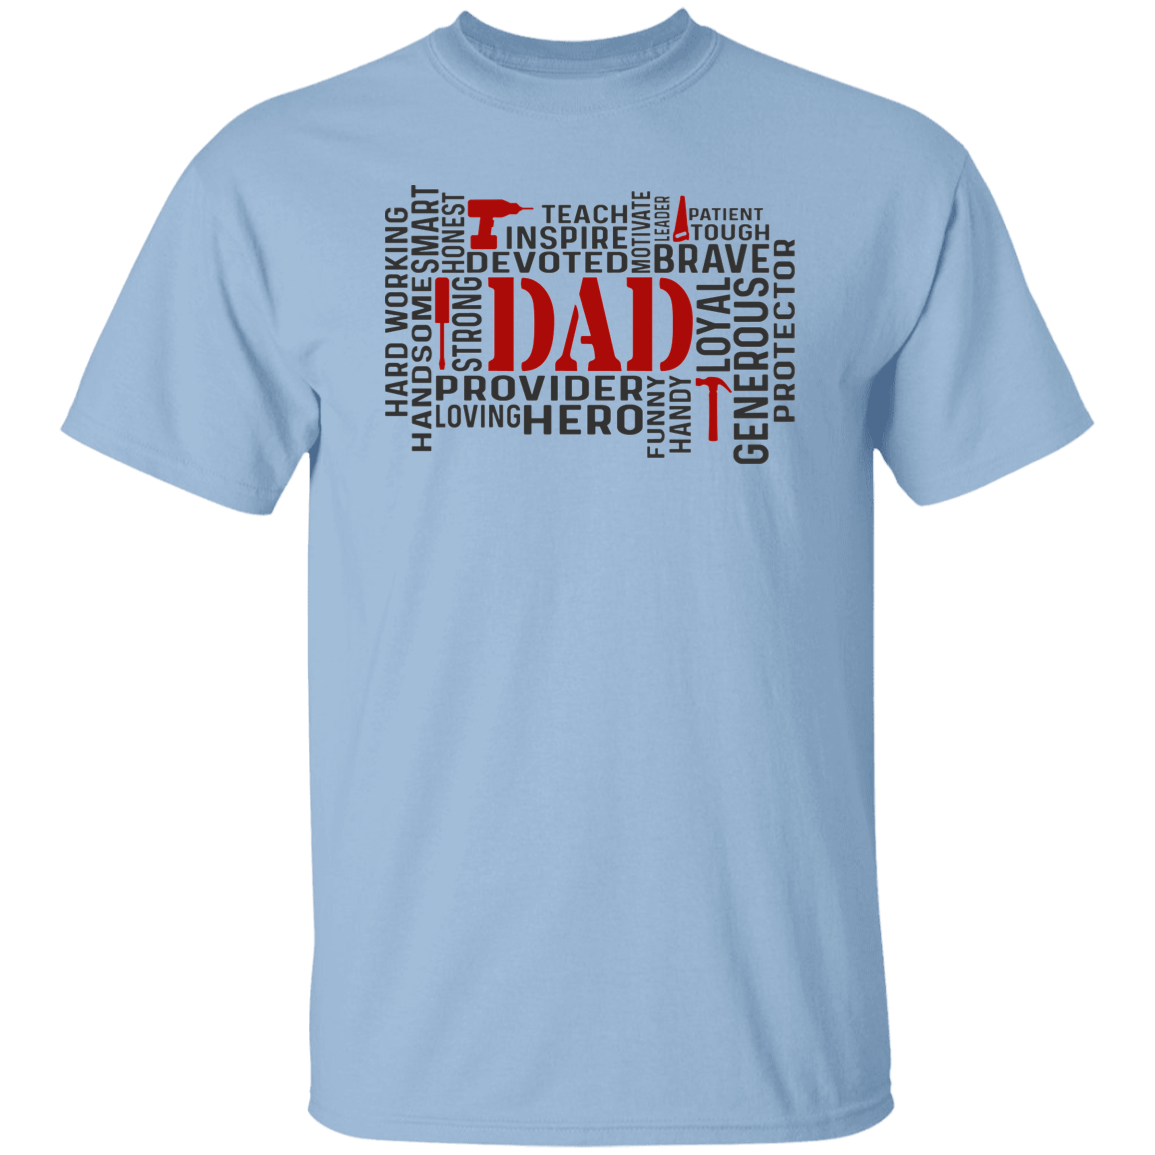 Dad Word Art T-Shirt